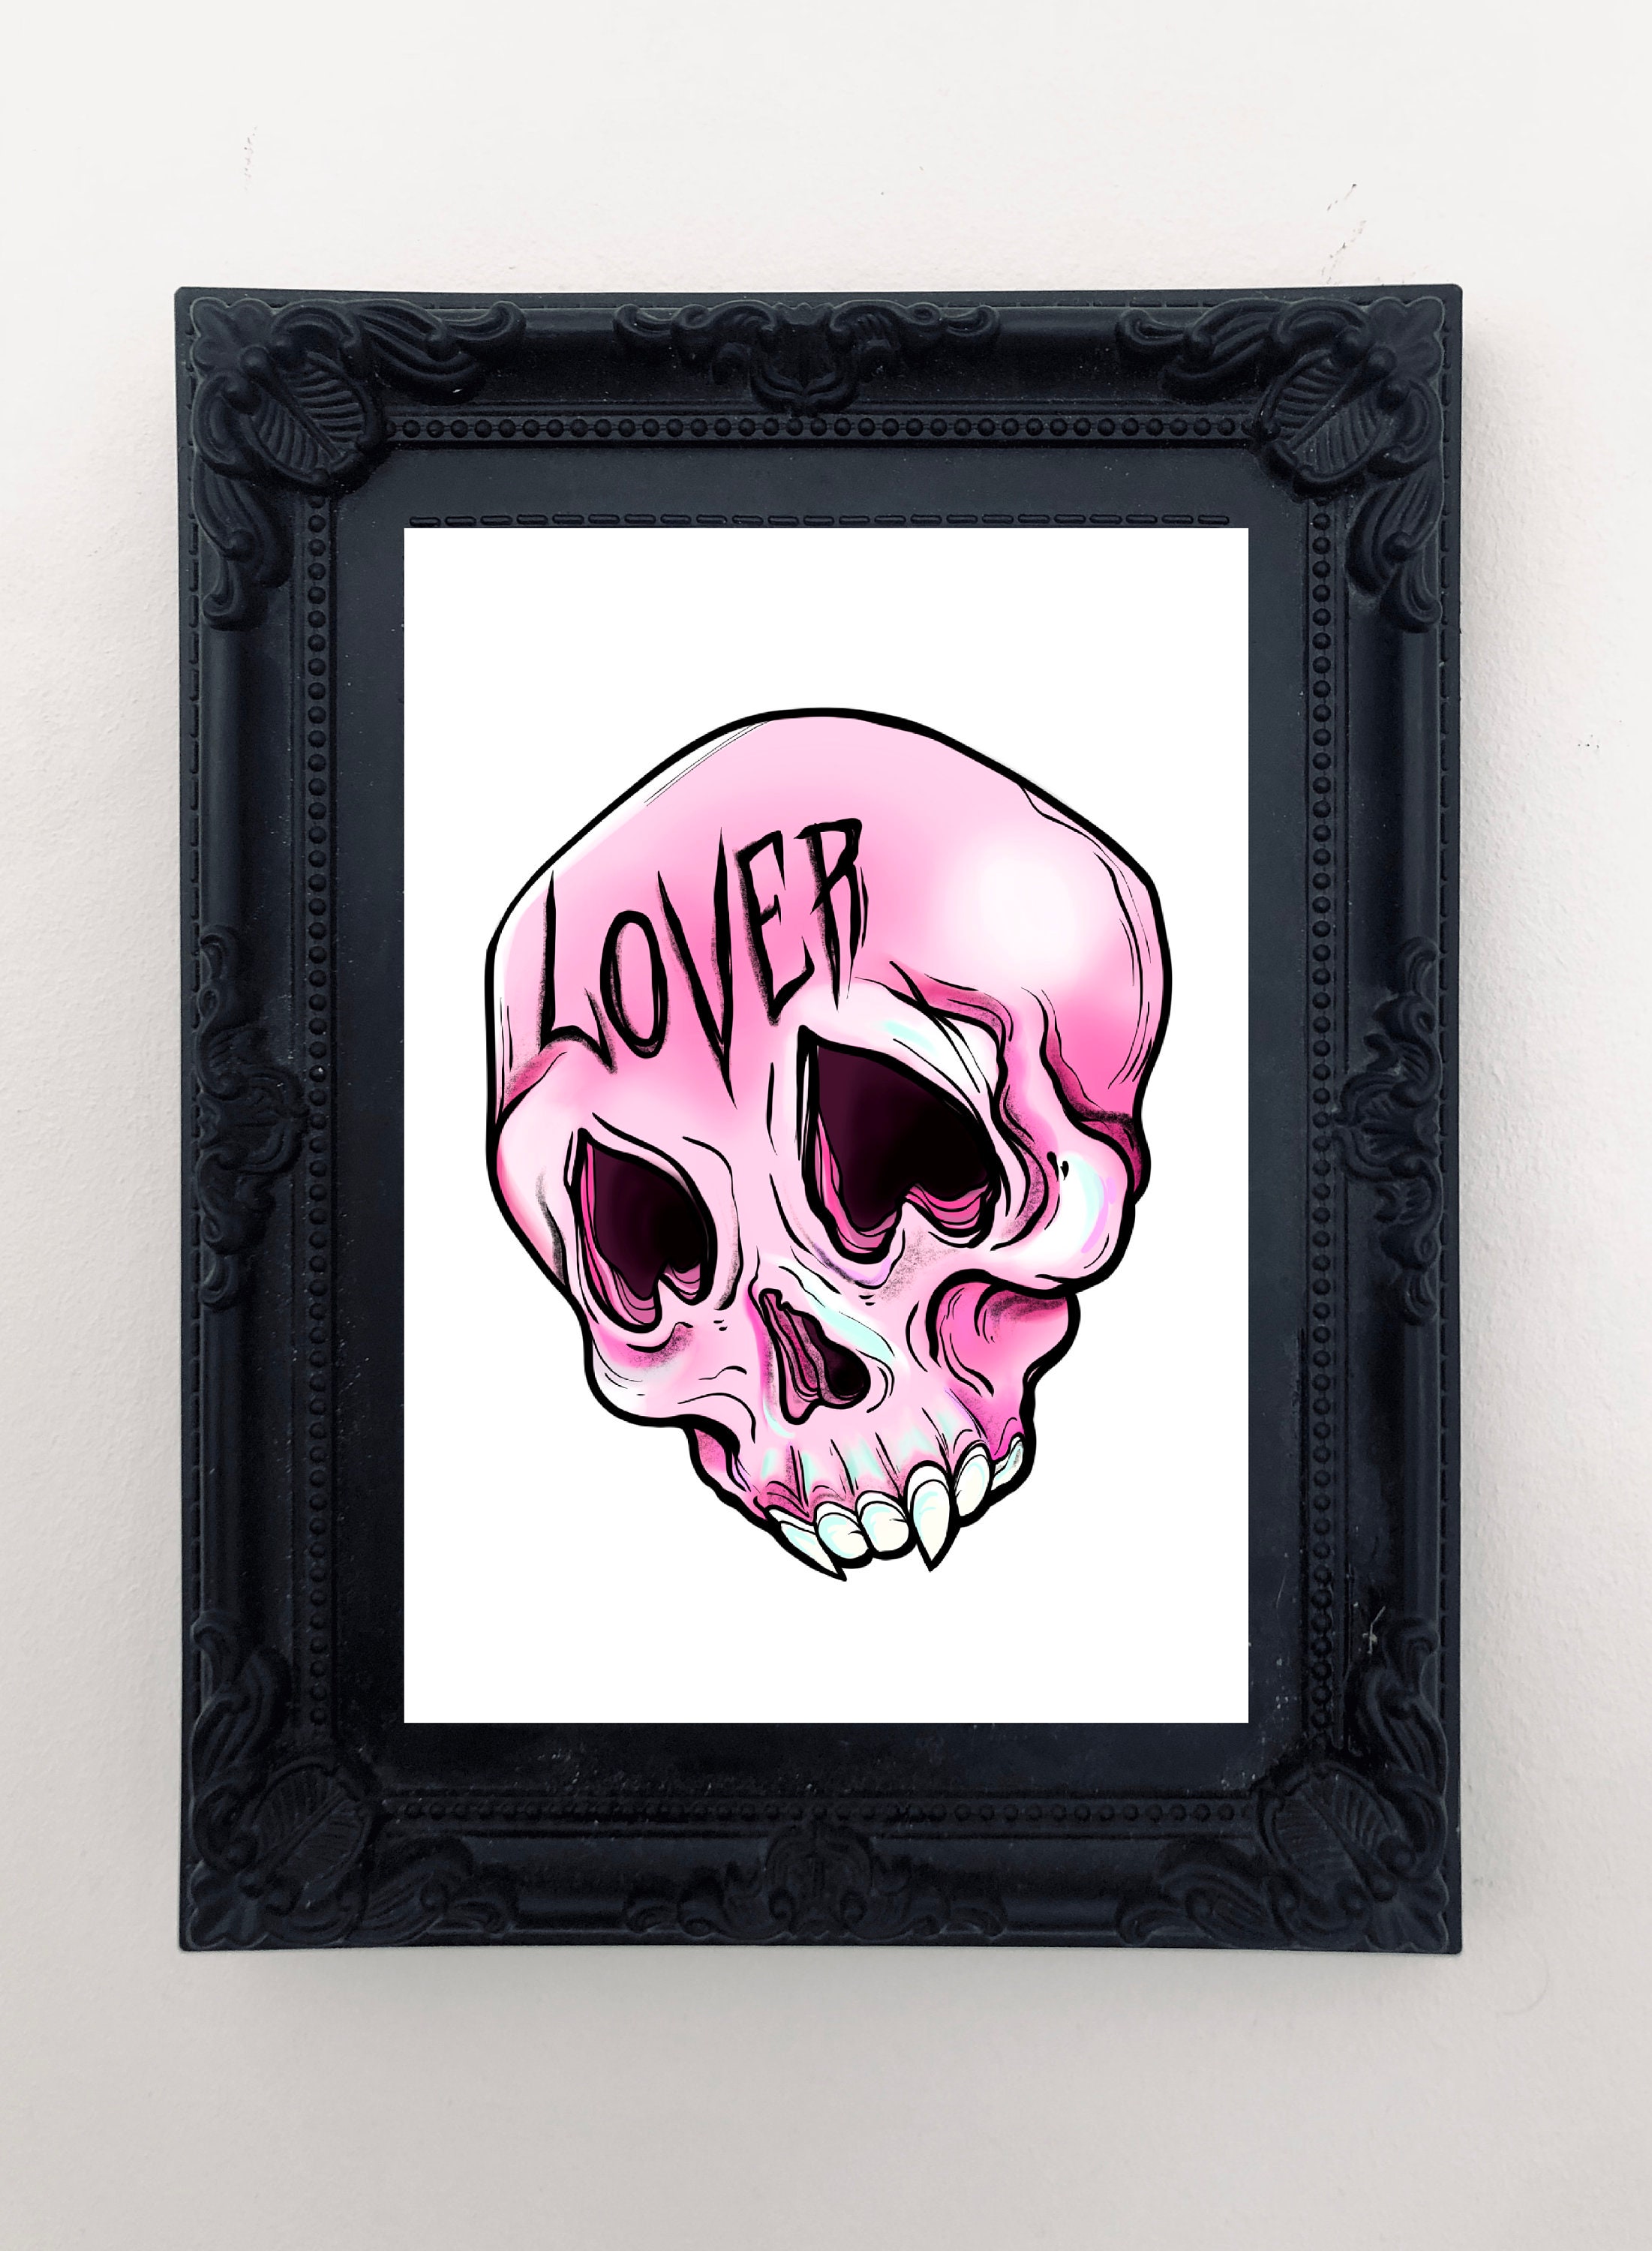 I Love Board Games - Funny Creepy Skull Gift, Fine Art Print